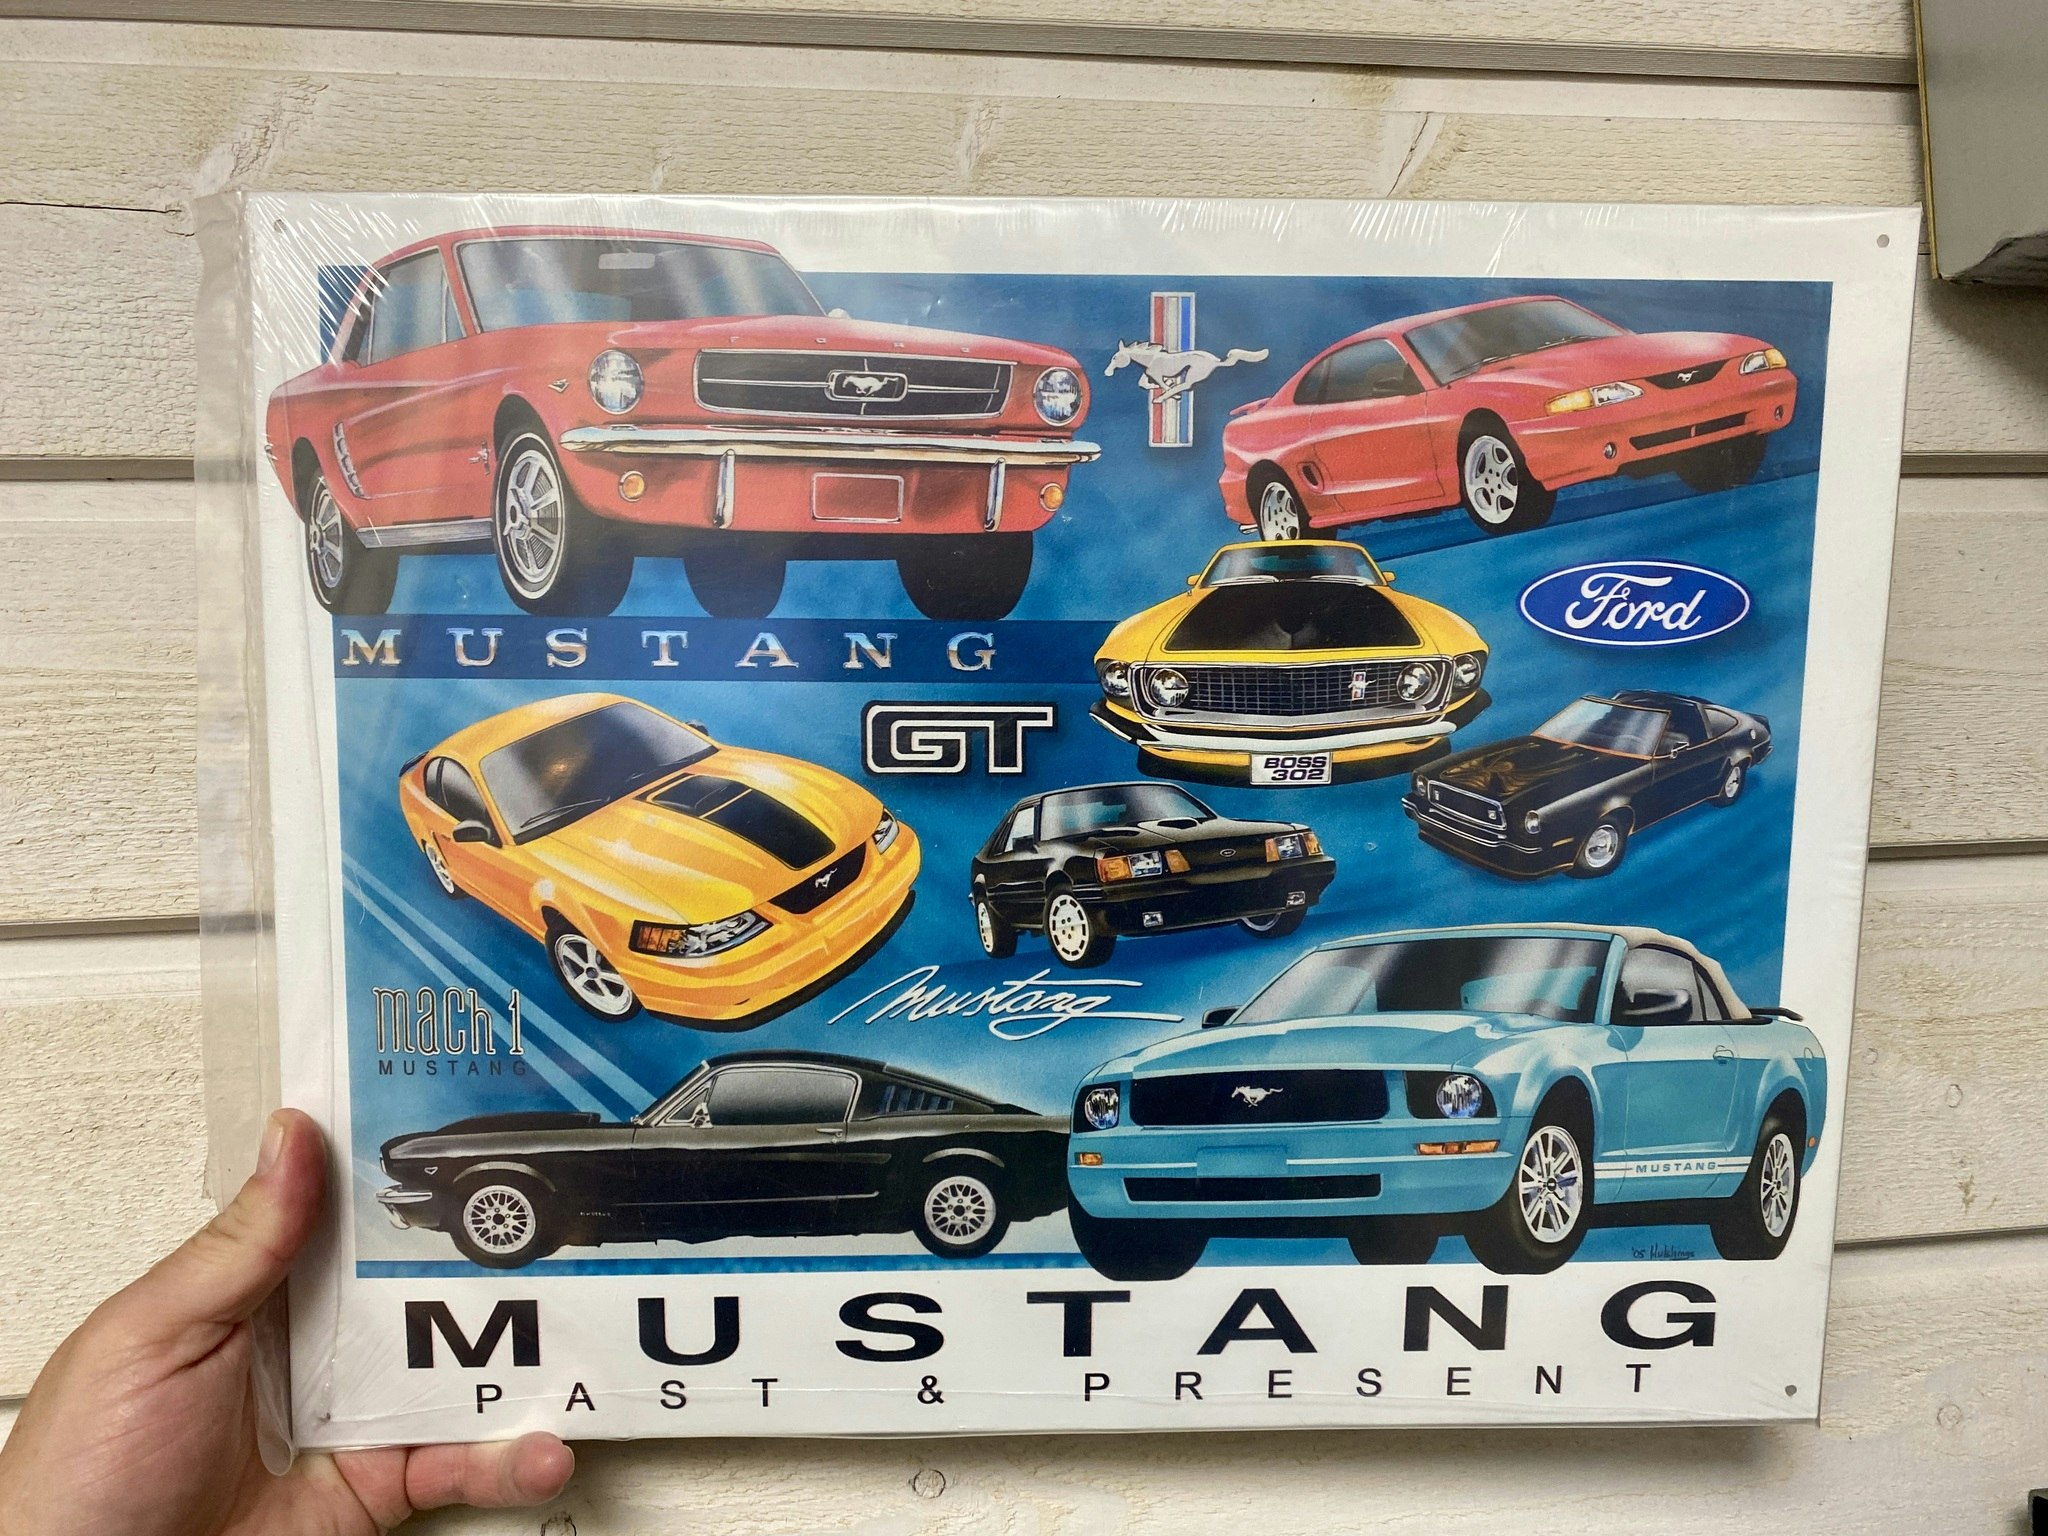 Plåtskylt/Tin sign: 32 x 42 cm Motiv: Ford Mustang GT Collage Past & Present